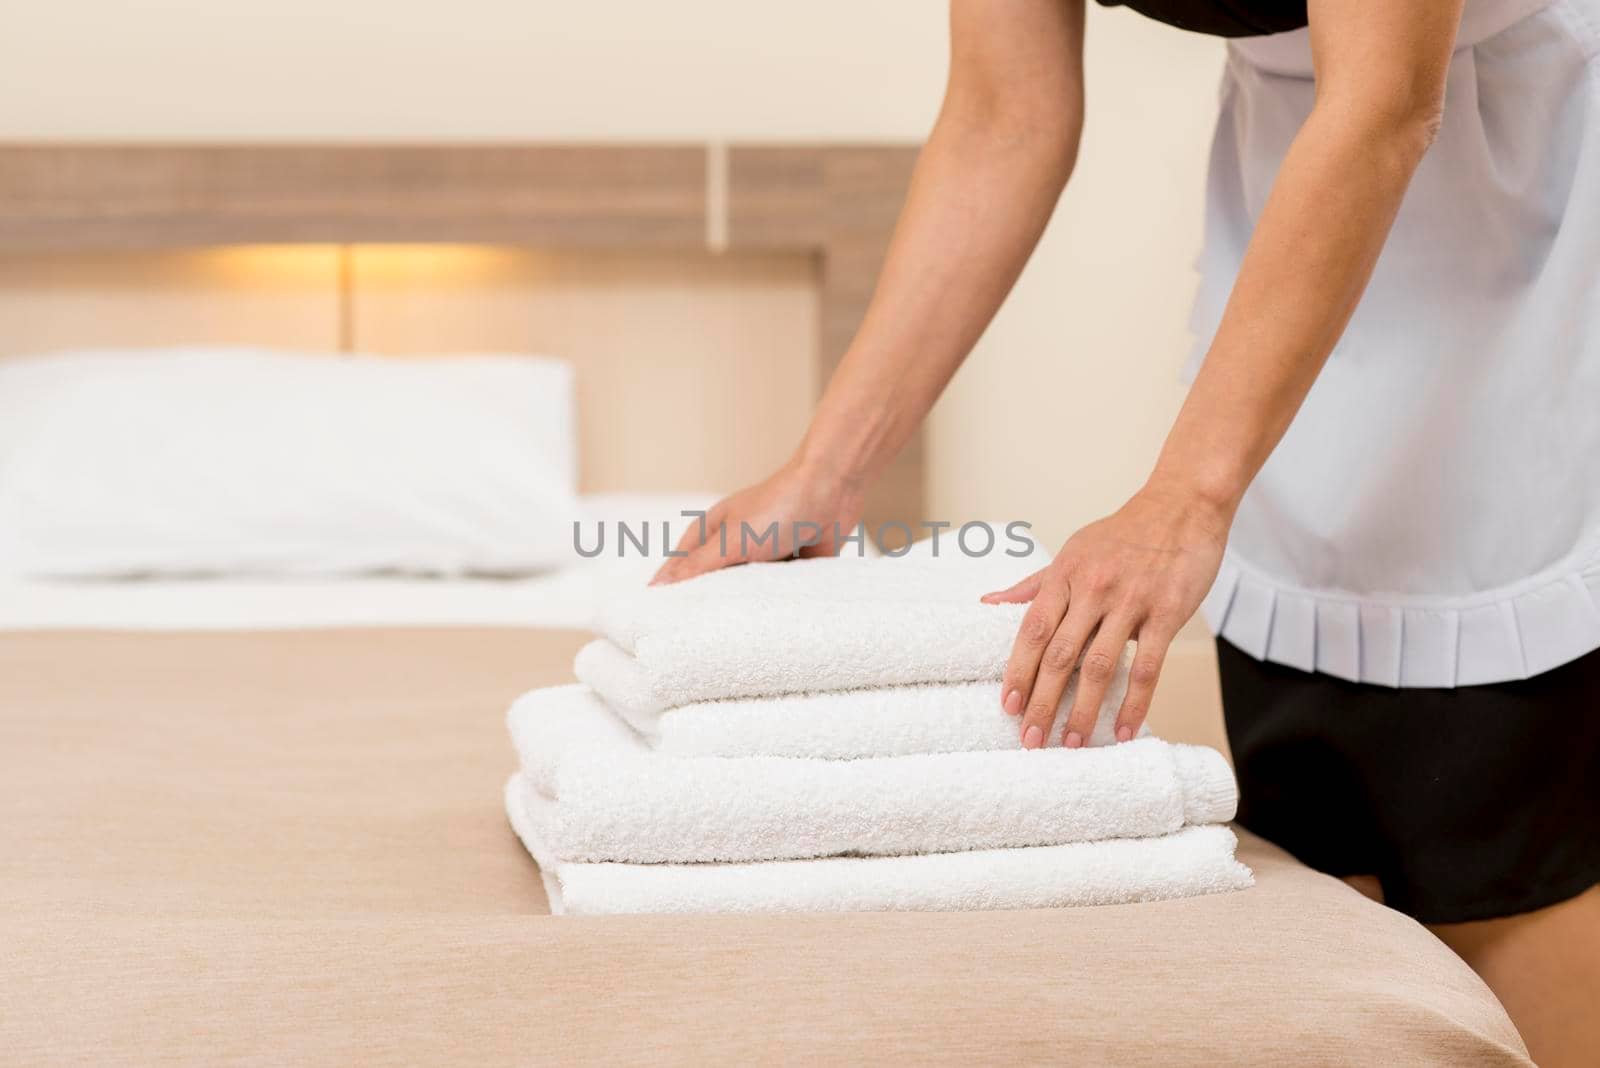 chambermaid preparing hotel room